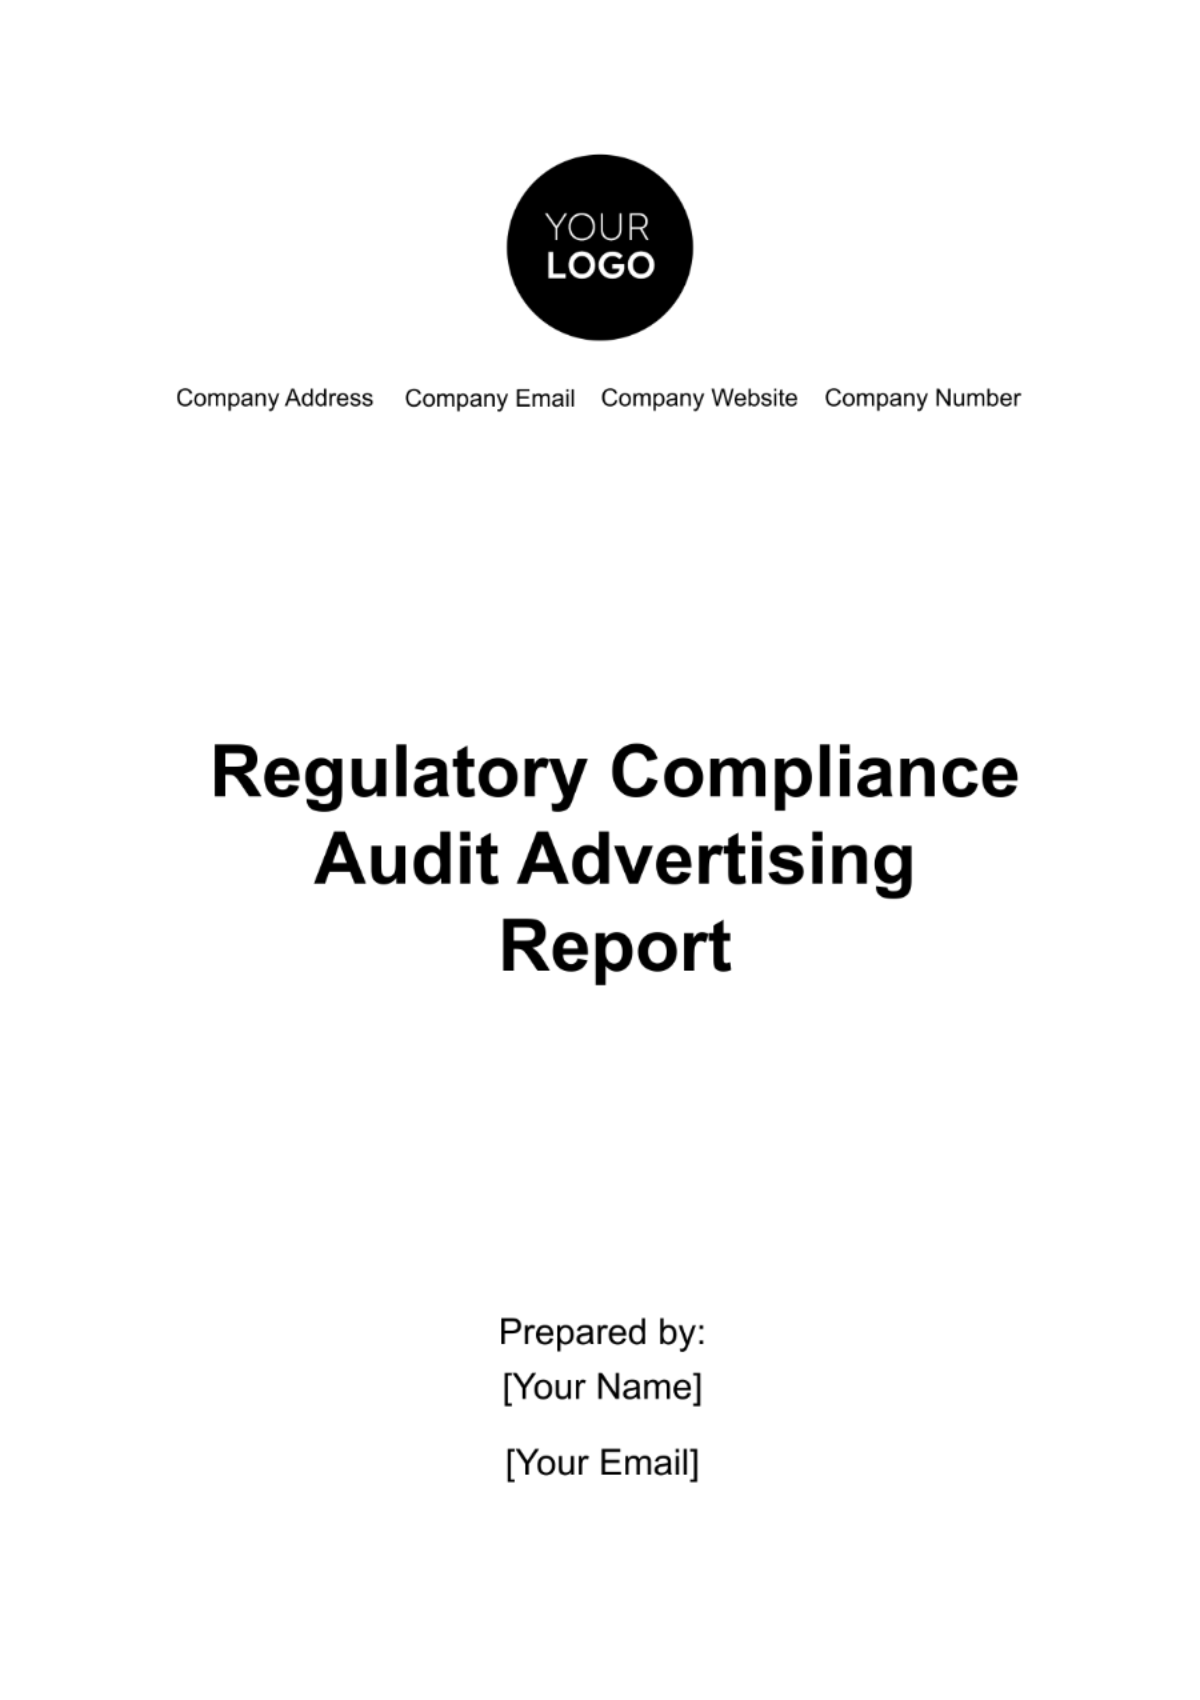 Regulatory Compliance Audit Advertising Report Template